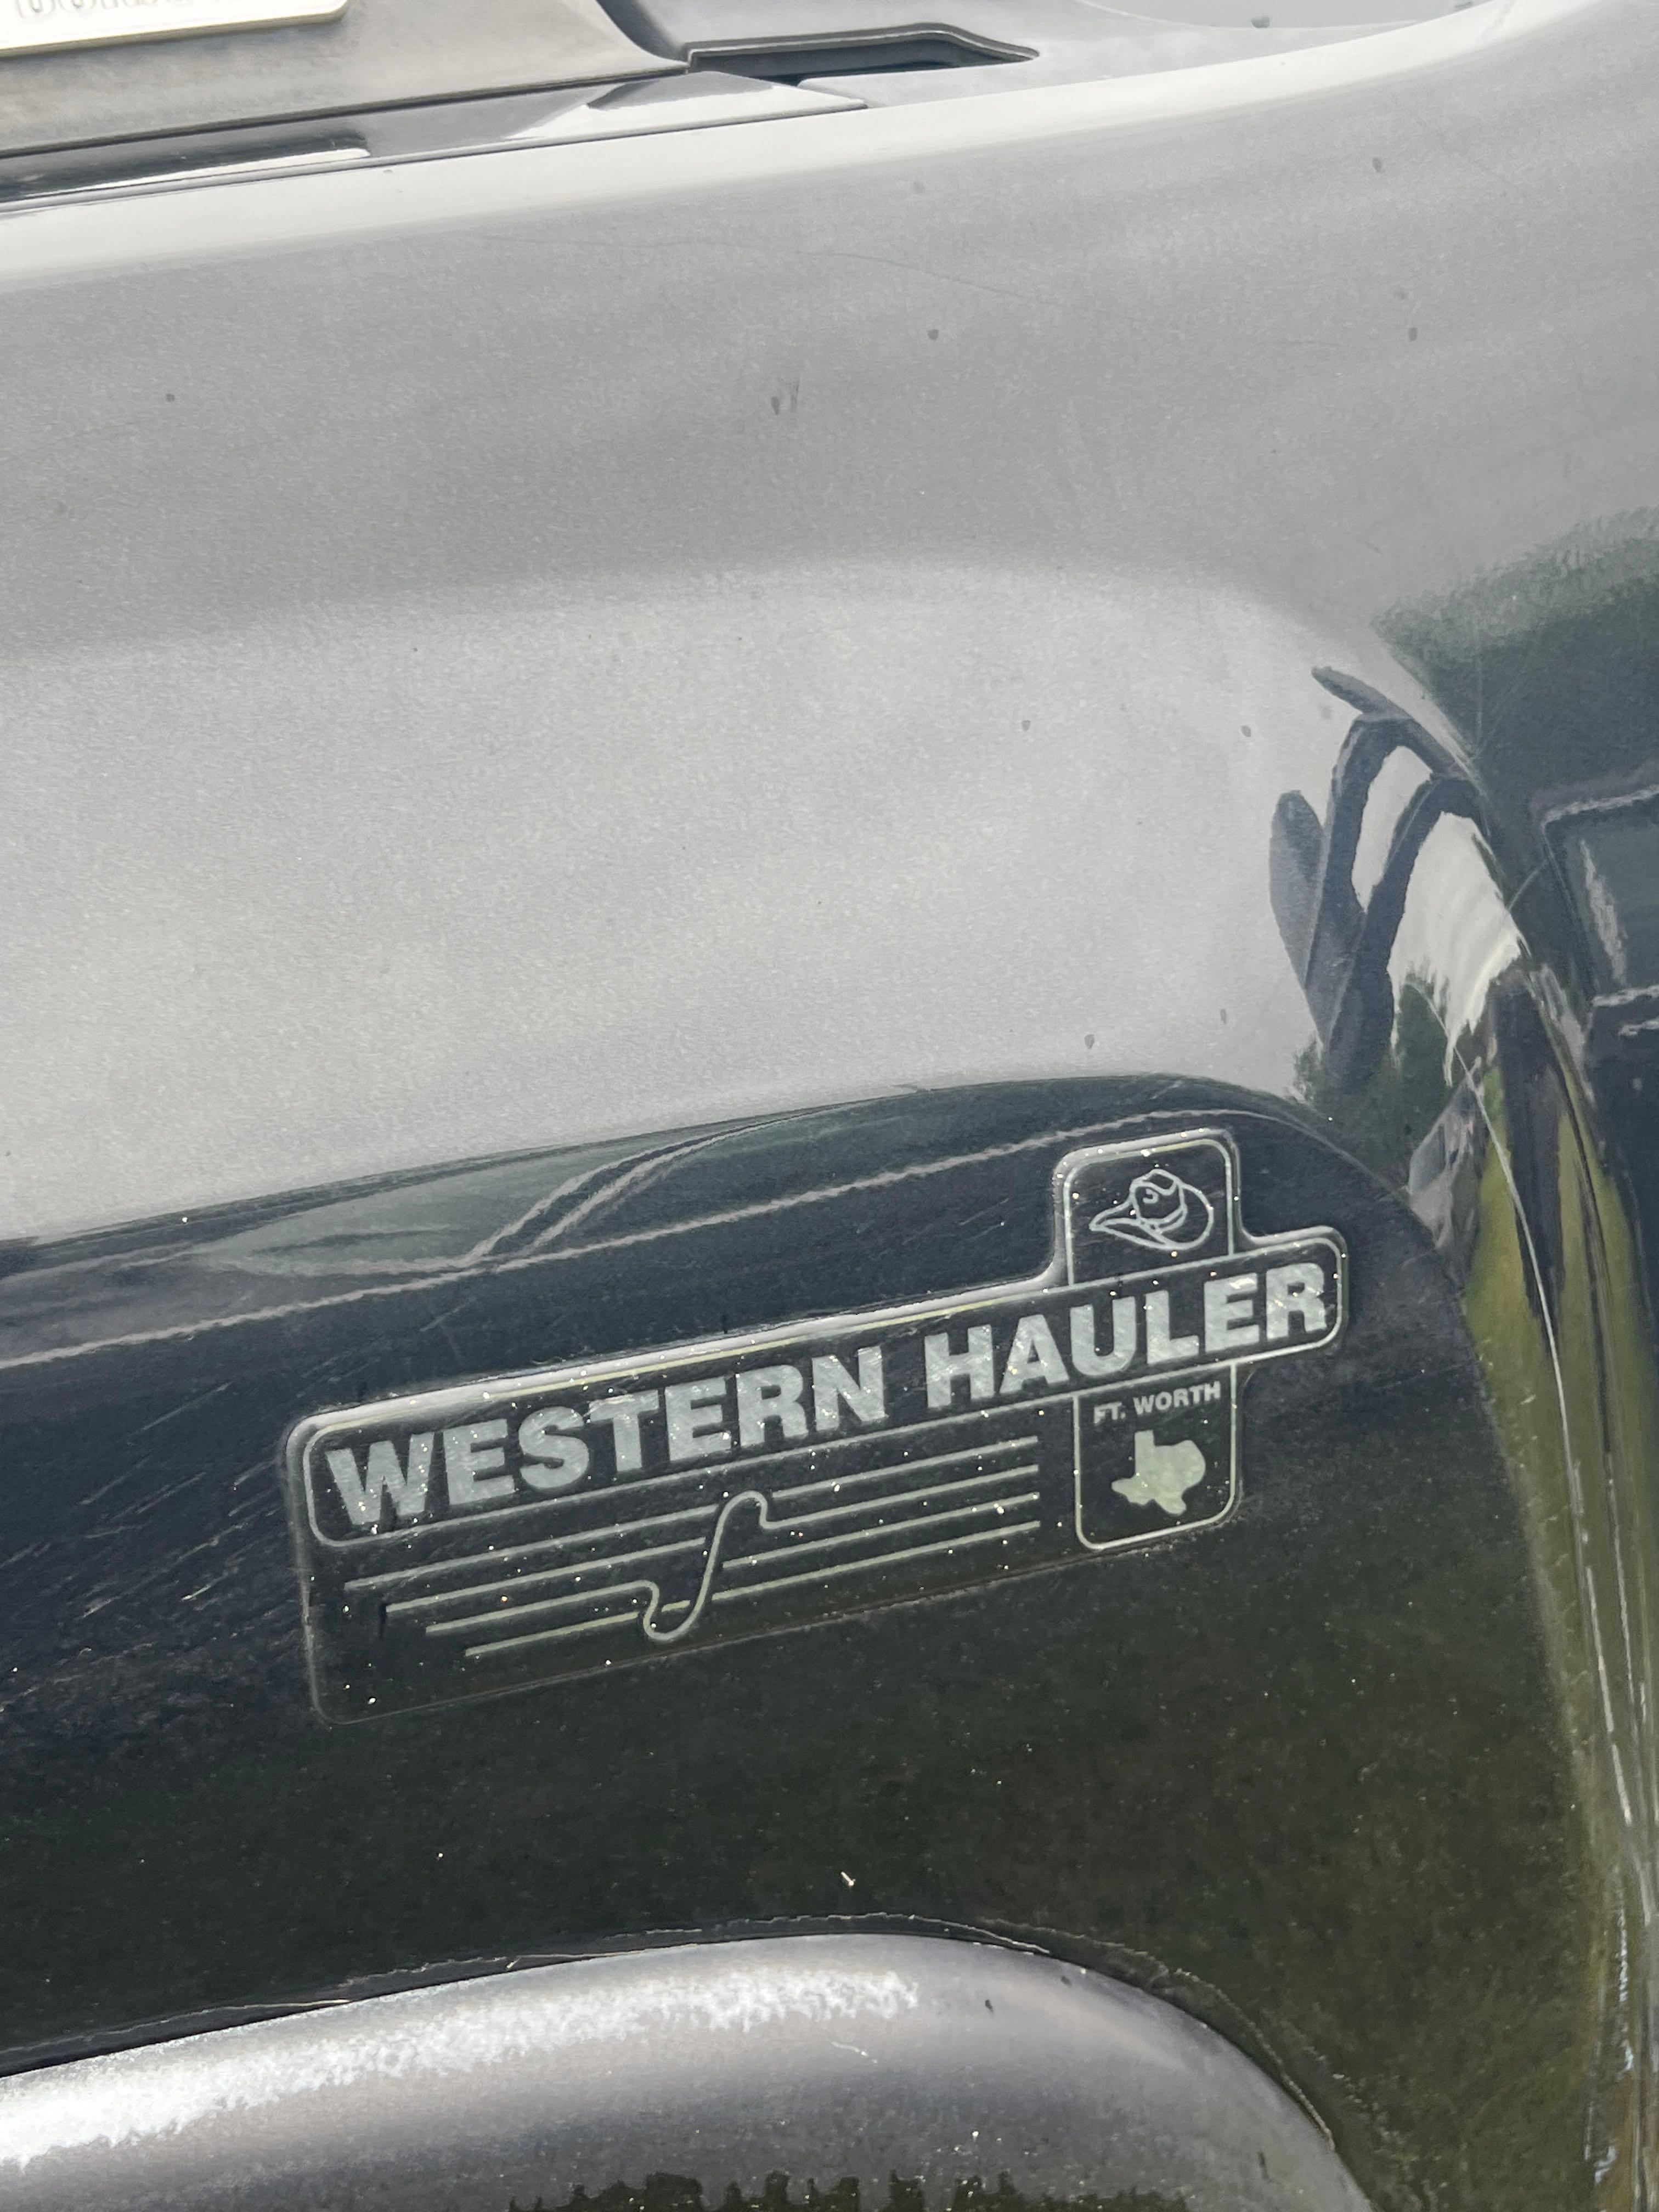 2009 Chevy Silverado Flatbed - Western Hauler - 140K miles - Diesel - Runs as it should